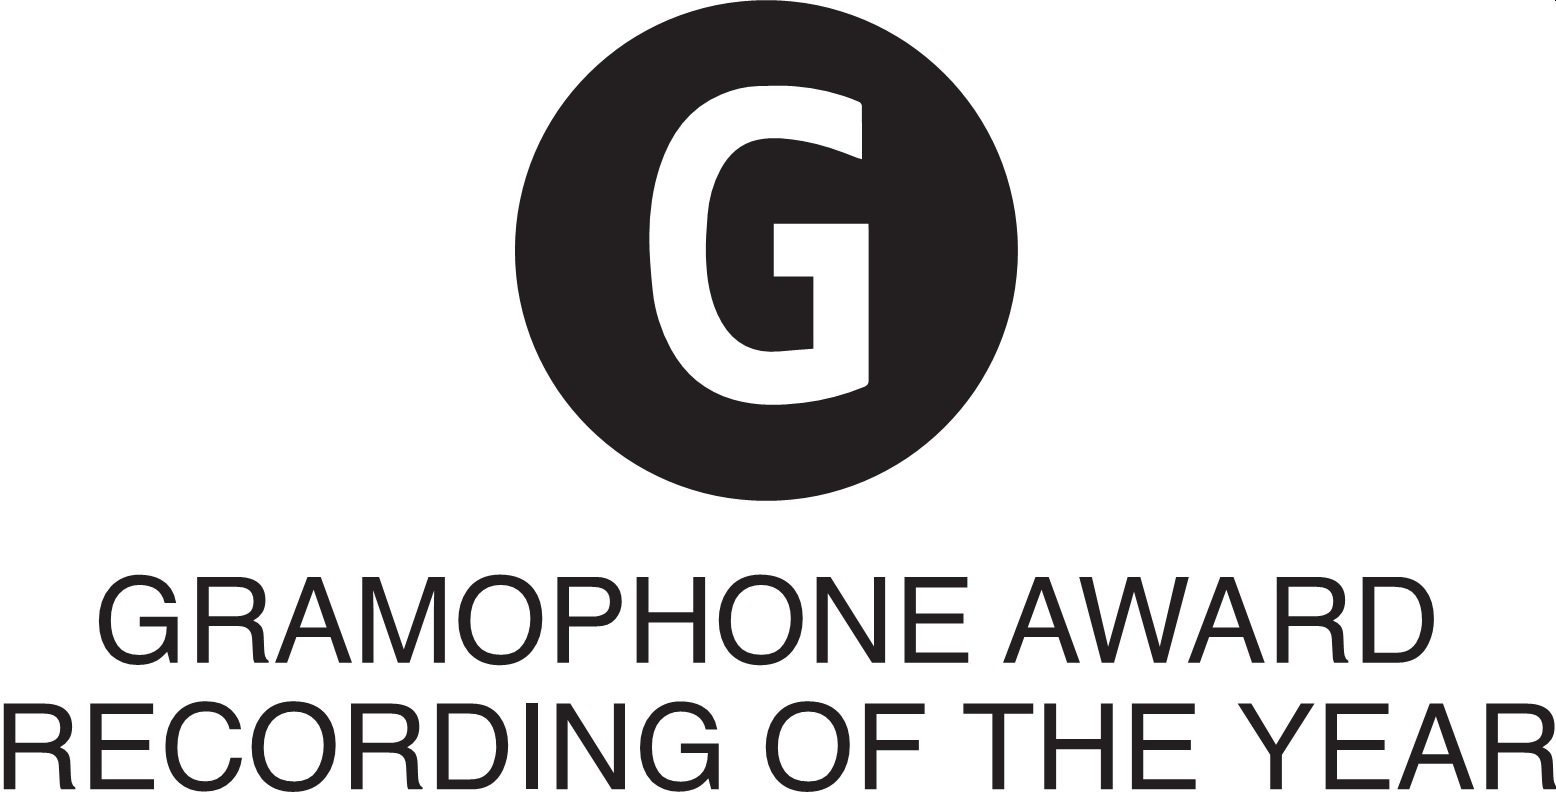 Gramophone Award: 'Recording of the Year' (2012)